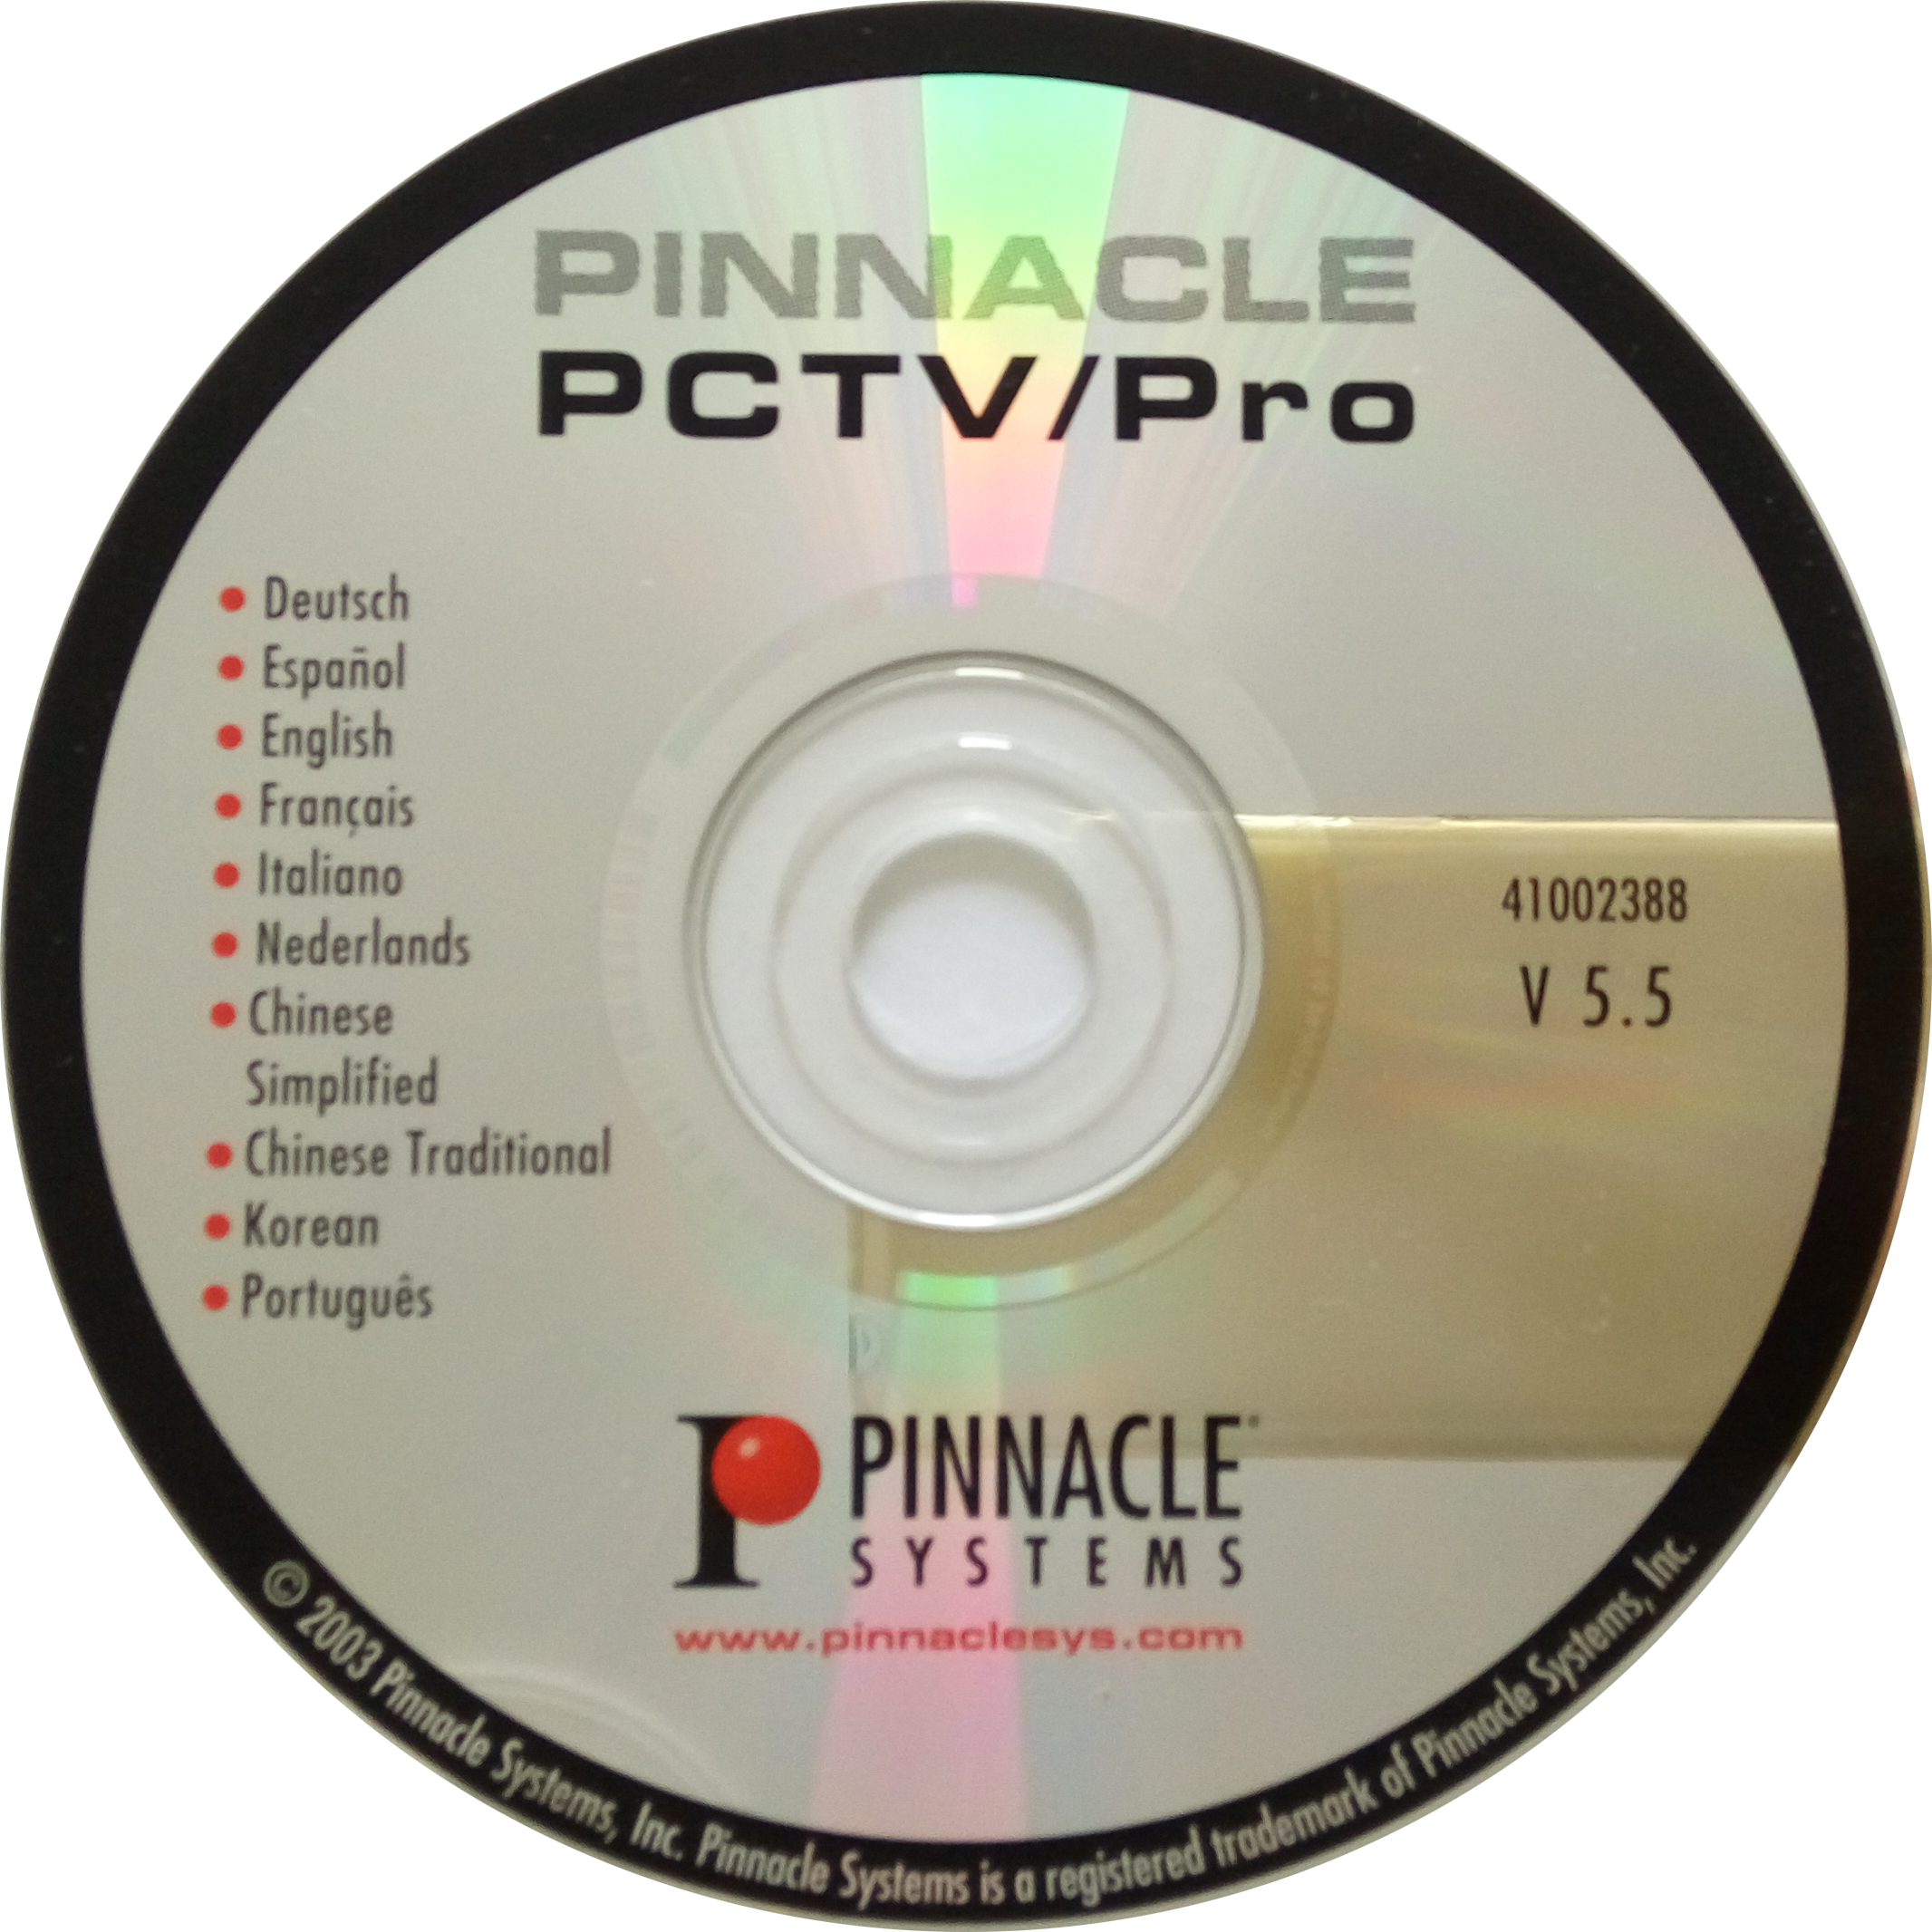 pinnacle pctv hd pro stick software download